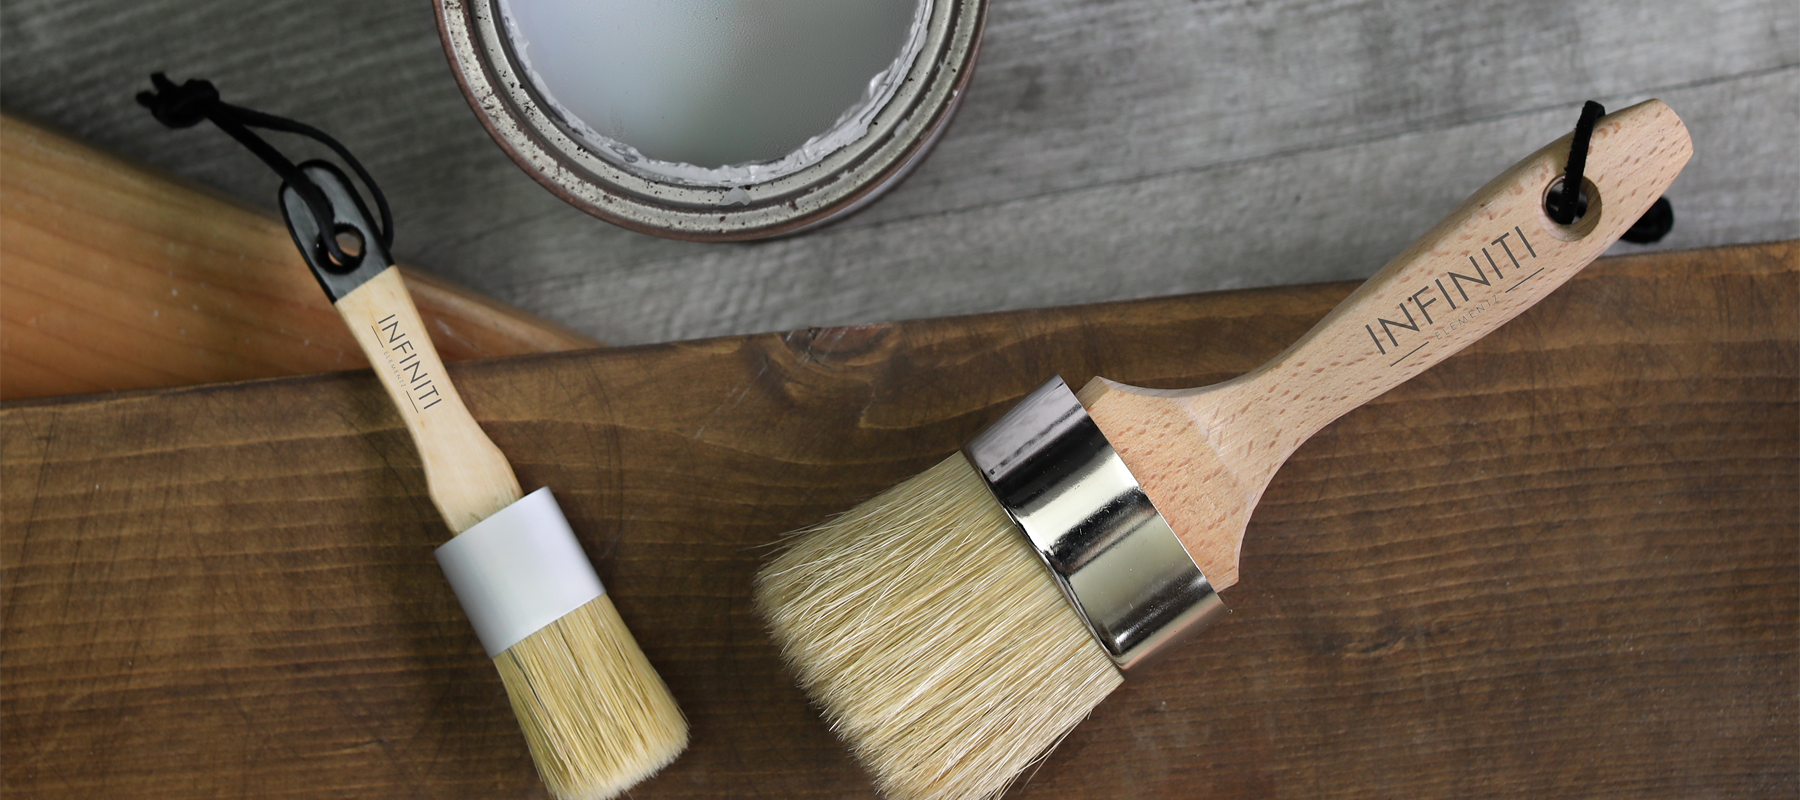 ROLLINGDOG Chalk Paint Wax Brush - Wax Brushes for Chalk Painting,Chalk Paint Brushes for Furniture (Wax Brush 3pc)